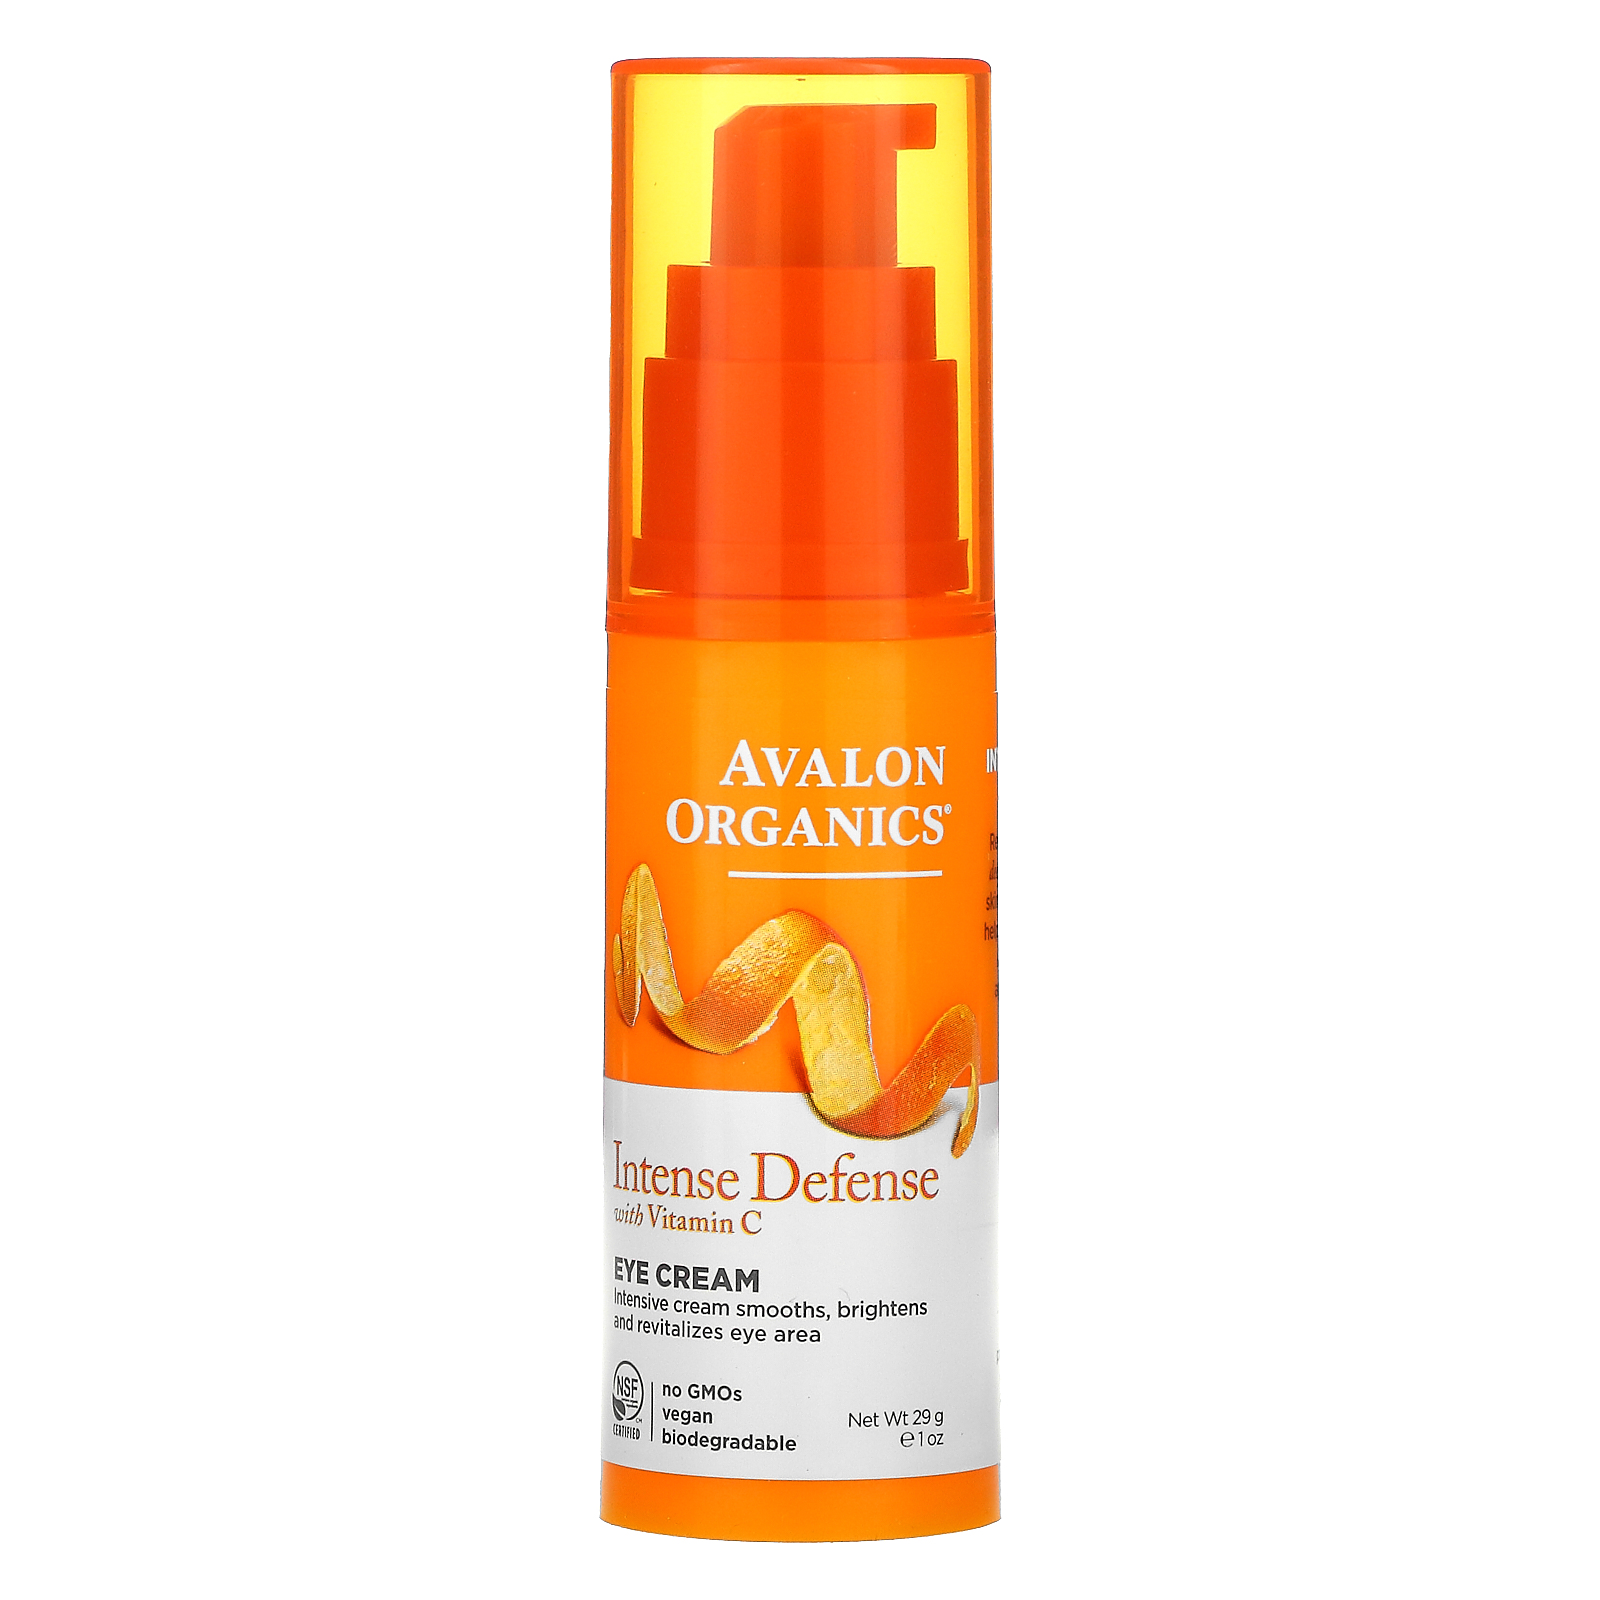 Avalon organics intense defense with vitamin c eye cream reviews Avalon Organics Vitamin C Revitalizing Eye Cream For Sale Online Ebay